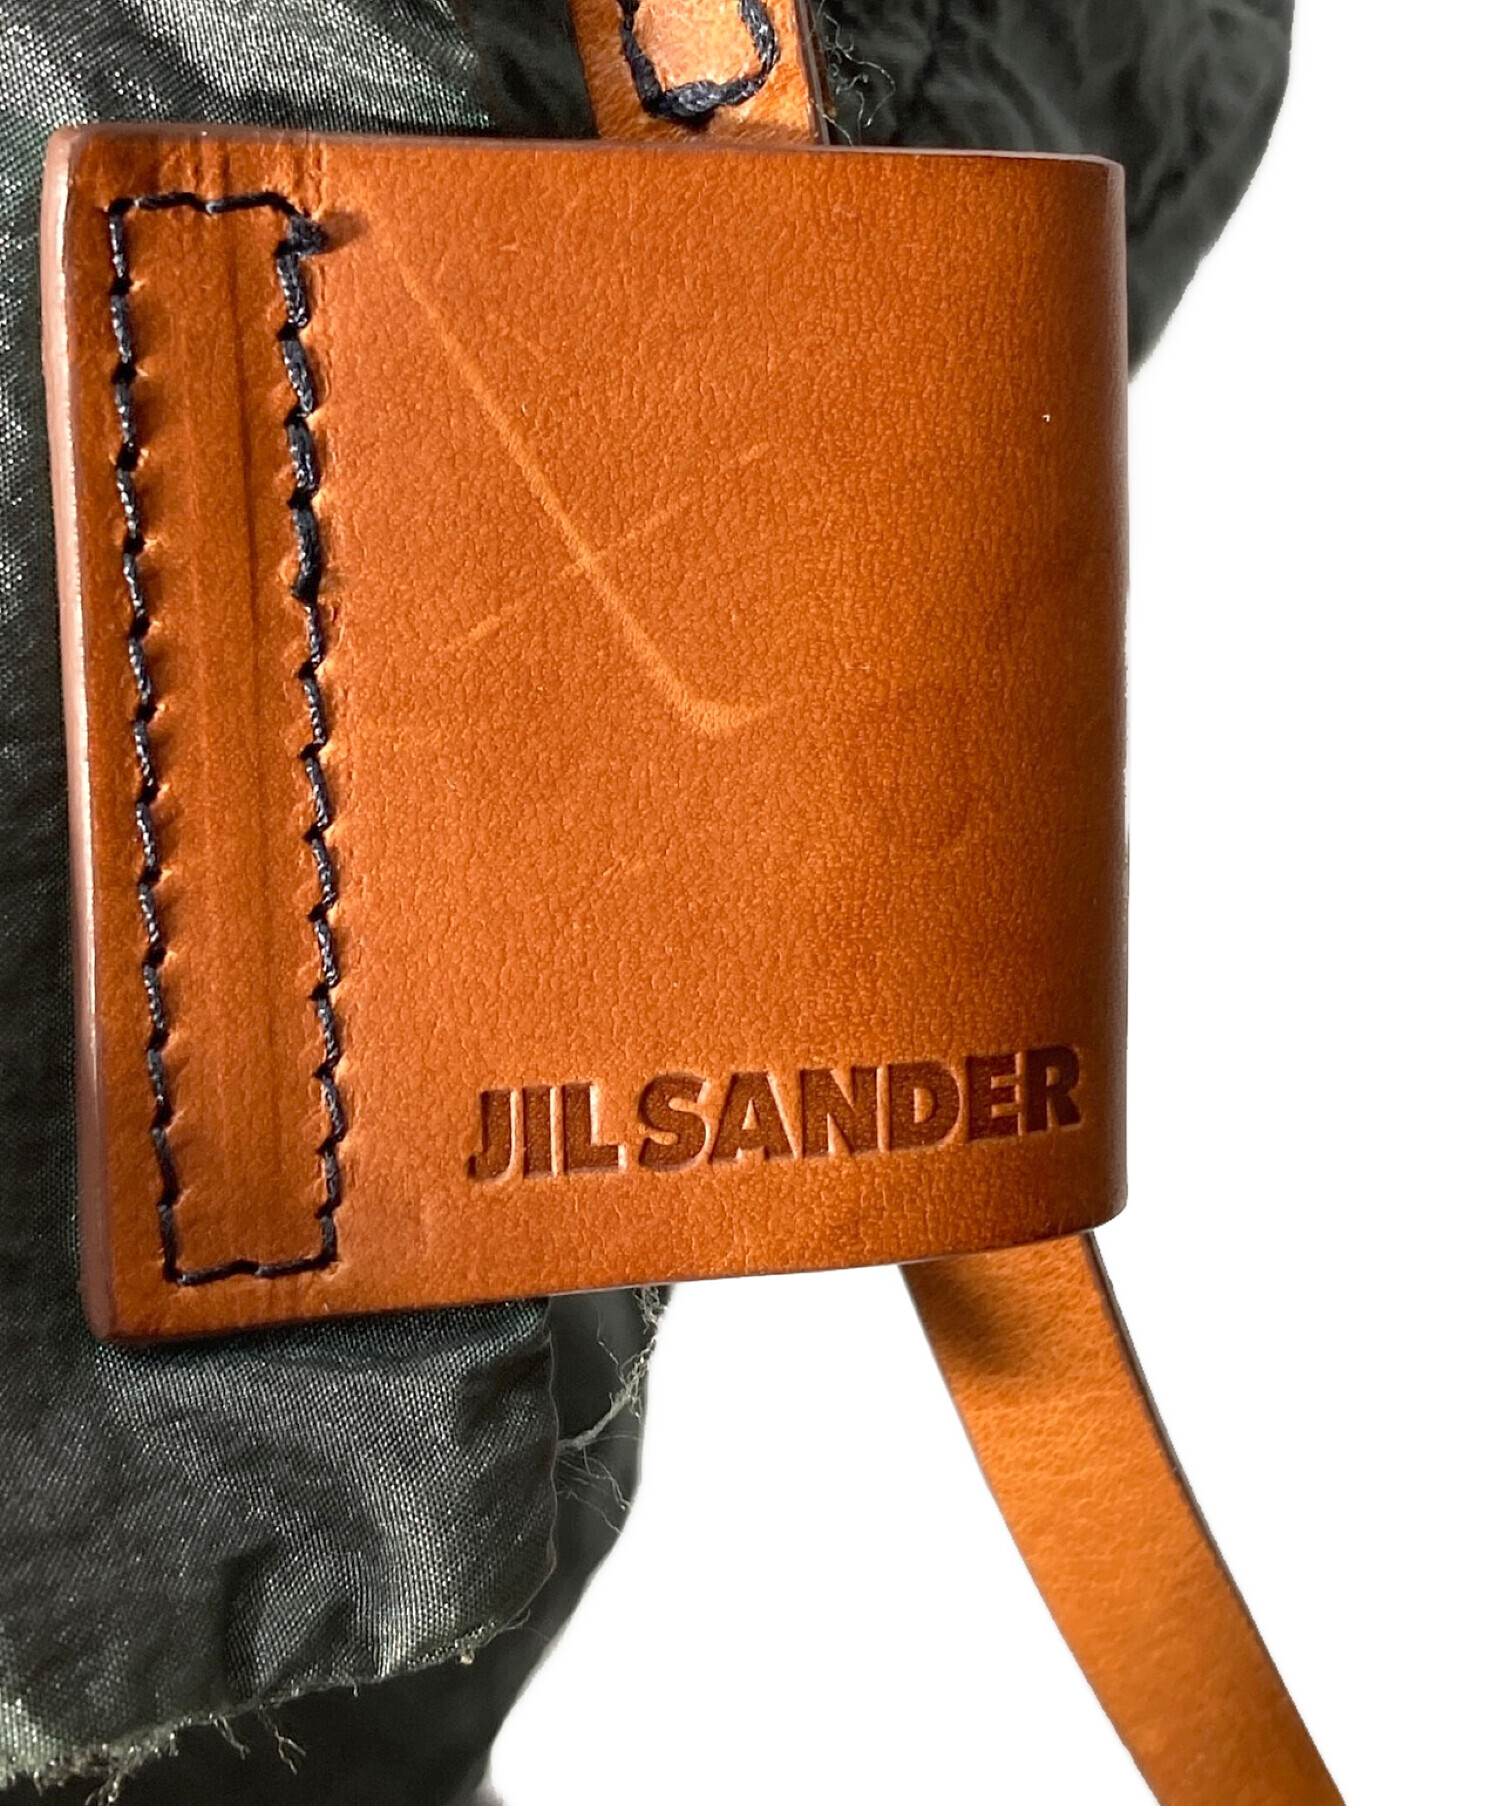 JIL SANDER (ジルサンダー) 2WAYバッグパック グレー×ブラウン